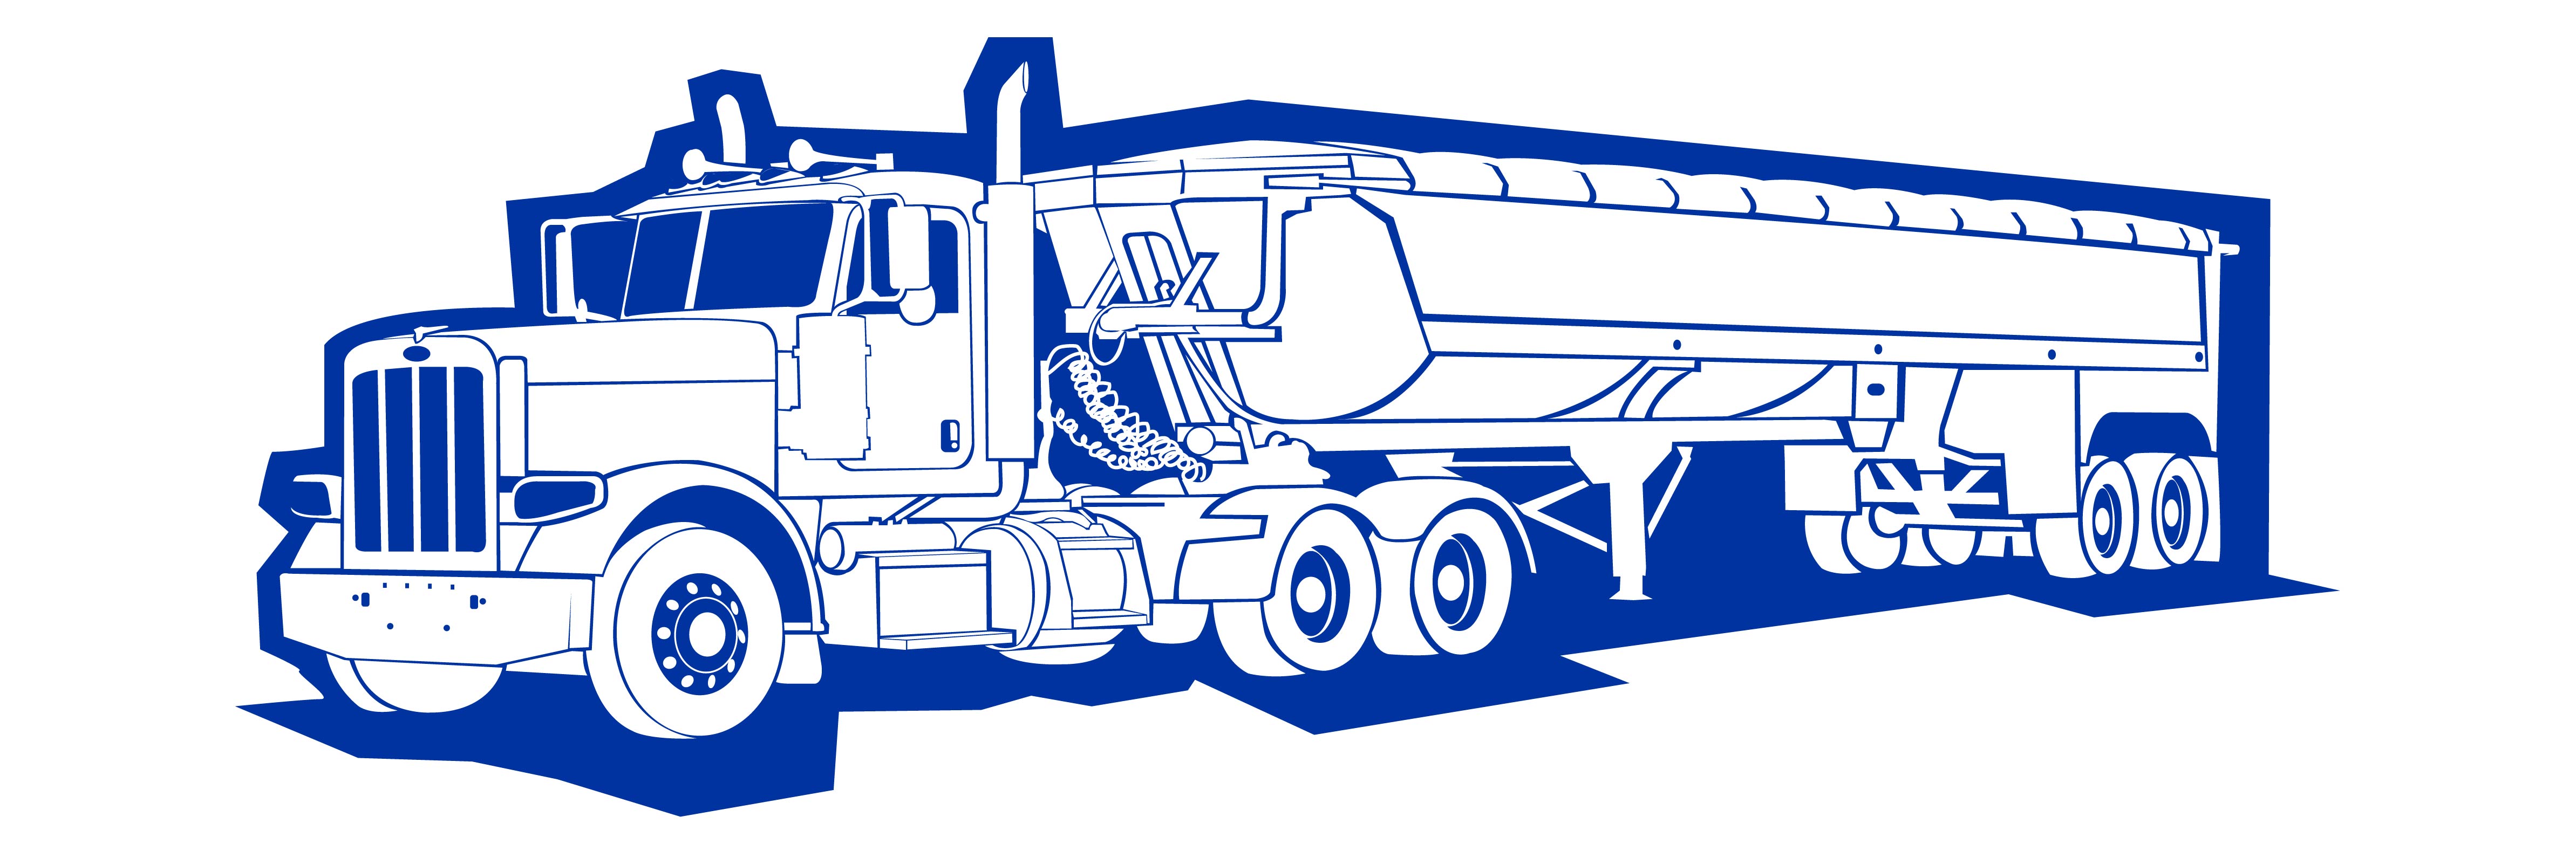 Laudick Trucking Dump Trailer